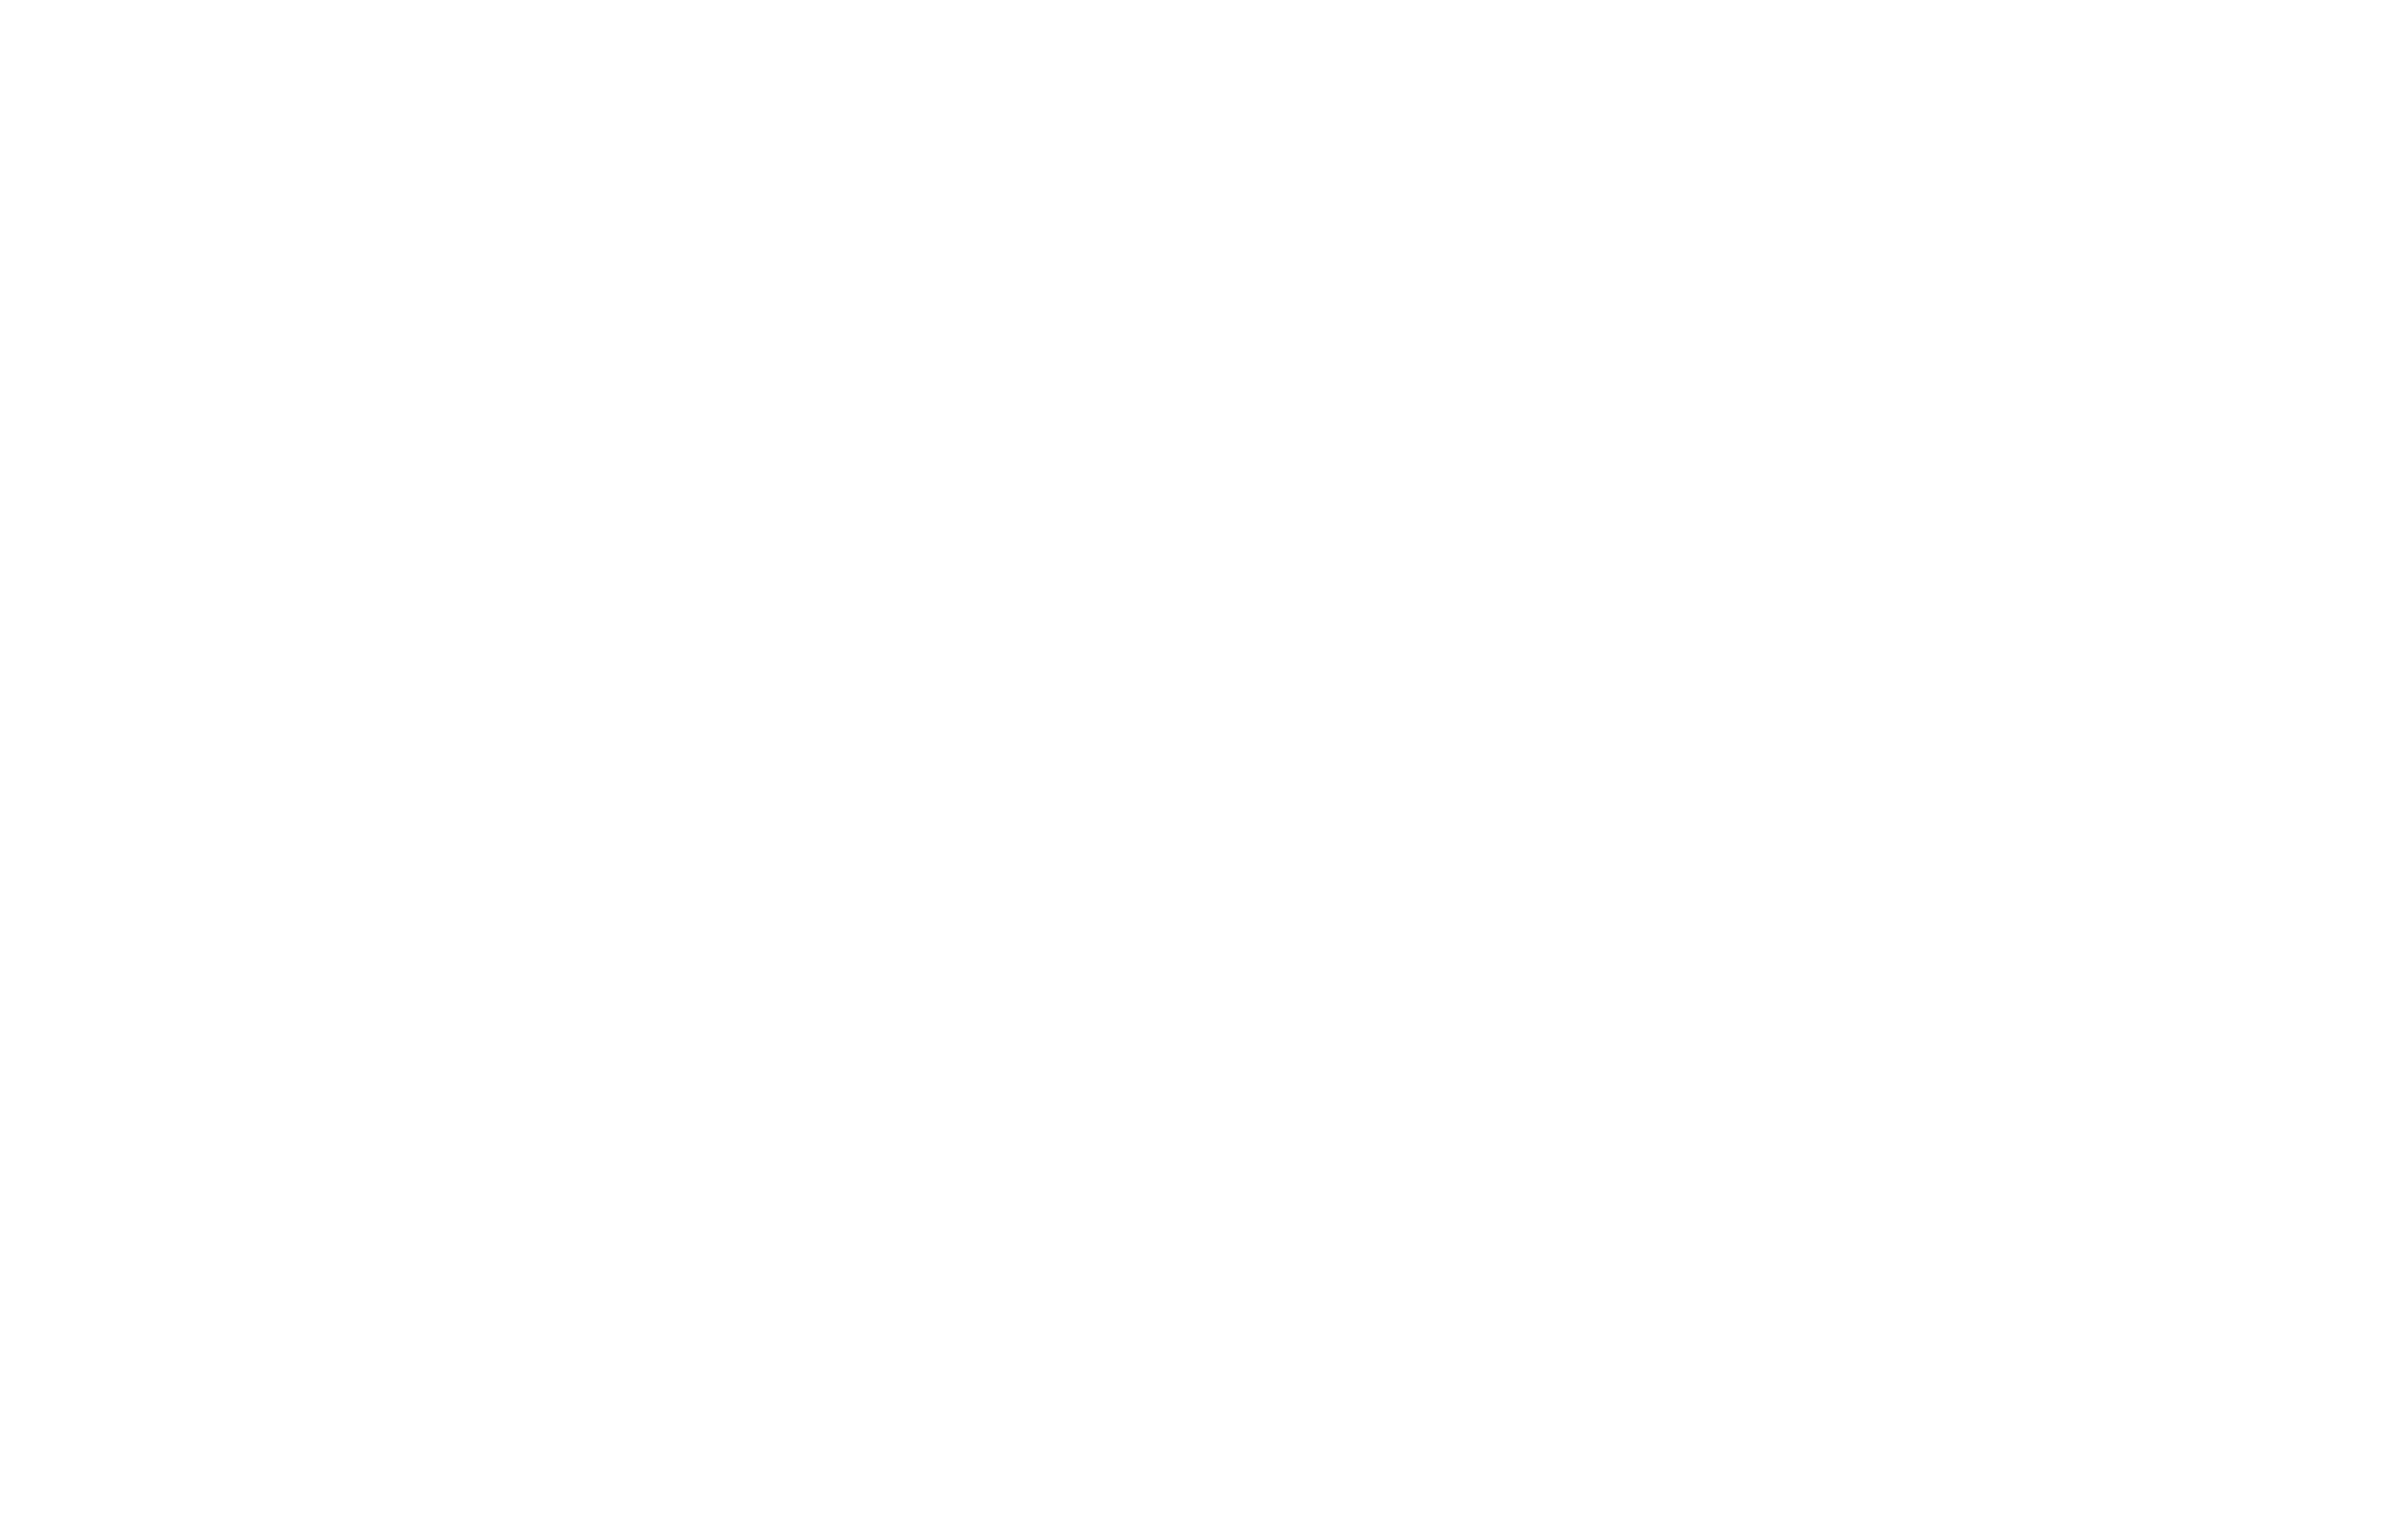 HEC Foundation